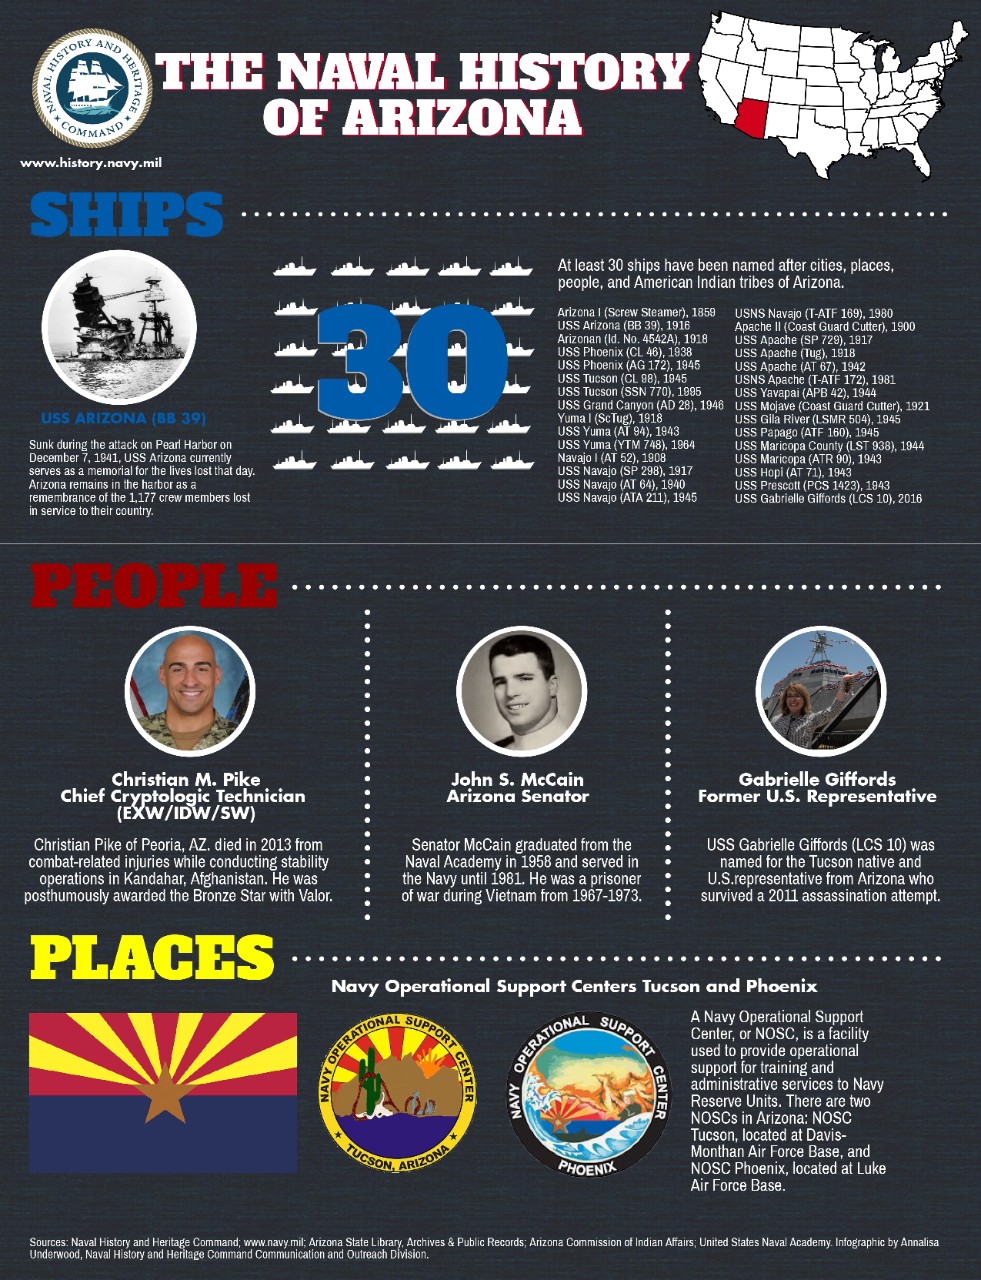 <h1>Arizona's Naval History</h1>
<p>&nbsp;</p>
